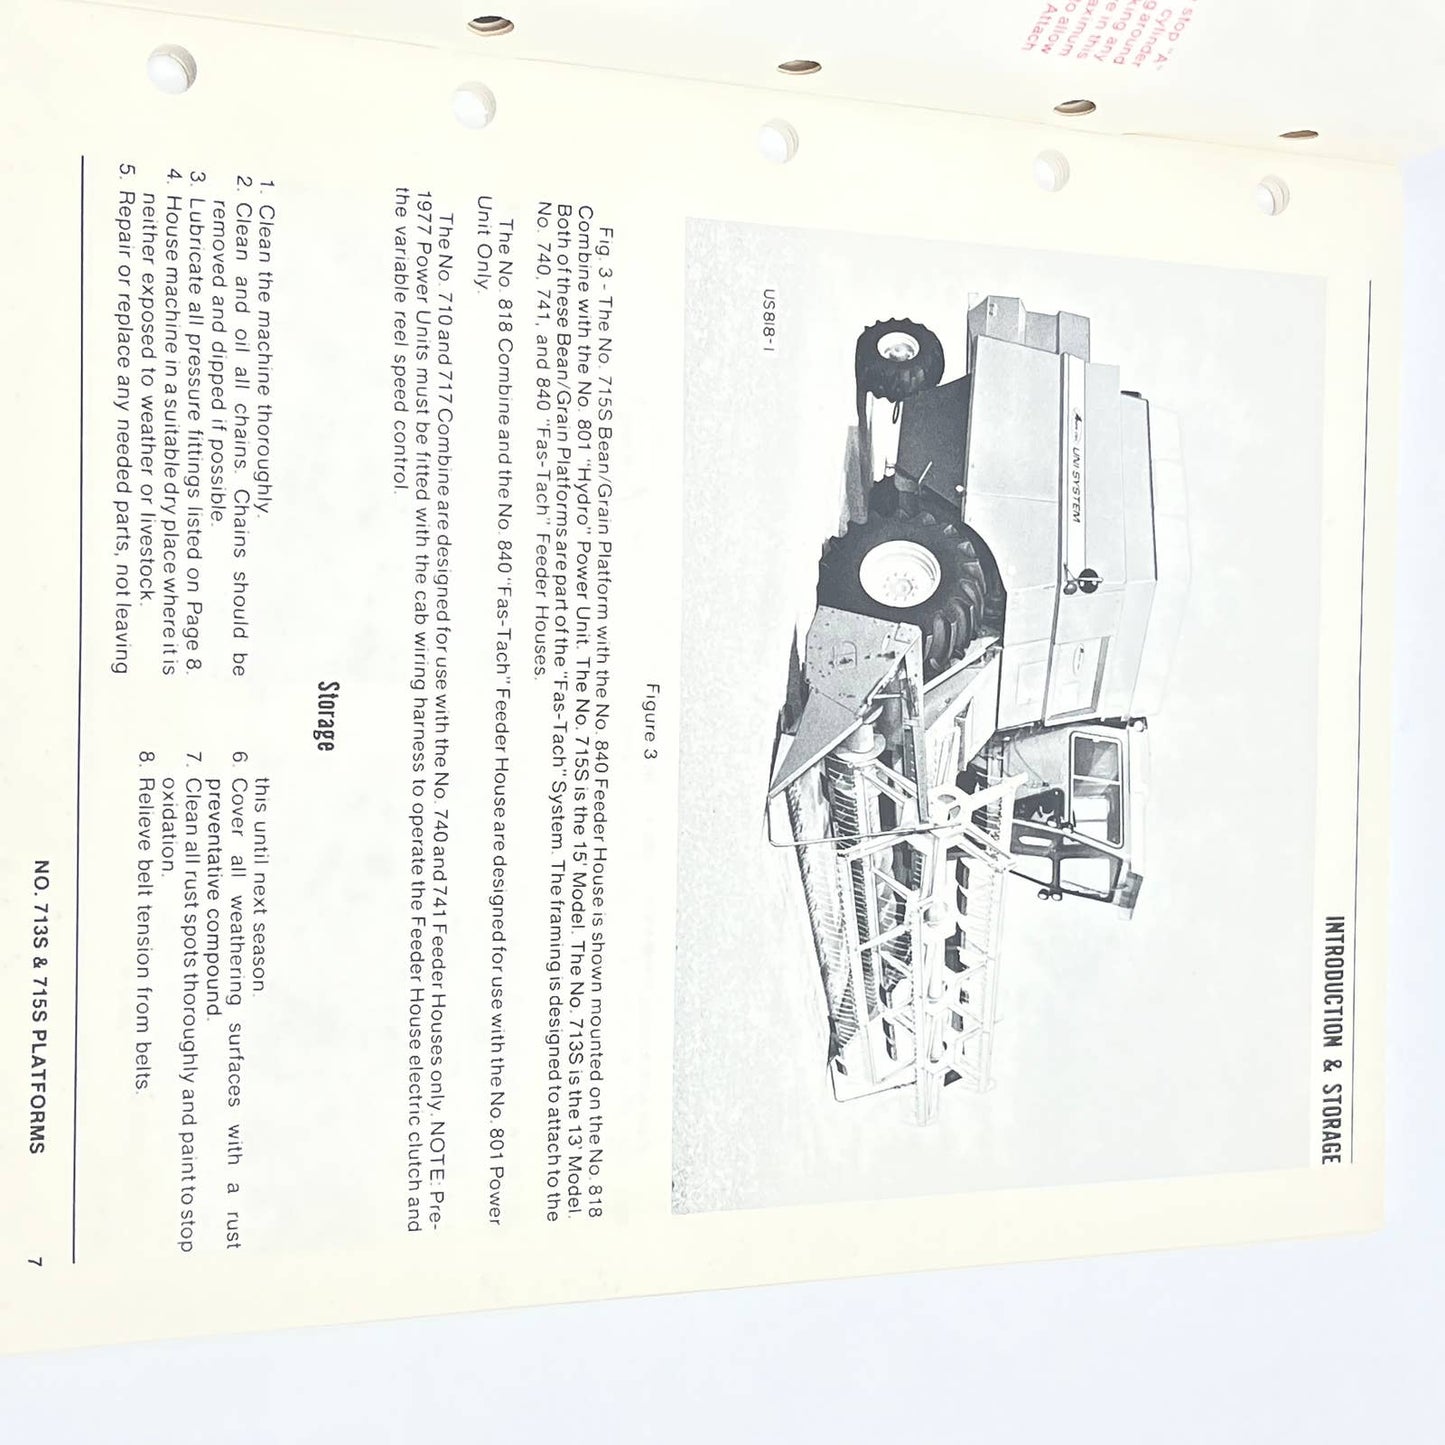 Original 1979 New Idea 713S & 715S UNI-FAS-TECH Bean/Grain Platform Manual TB9